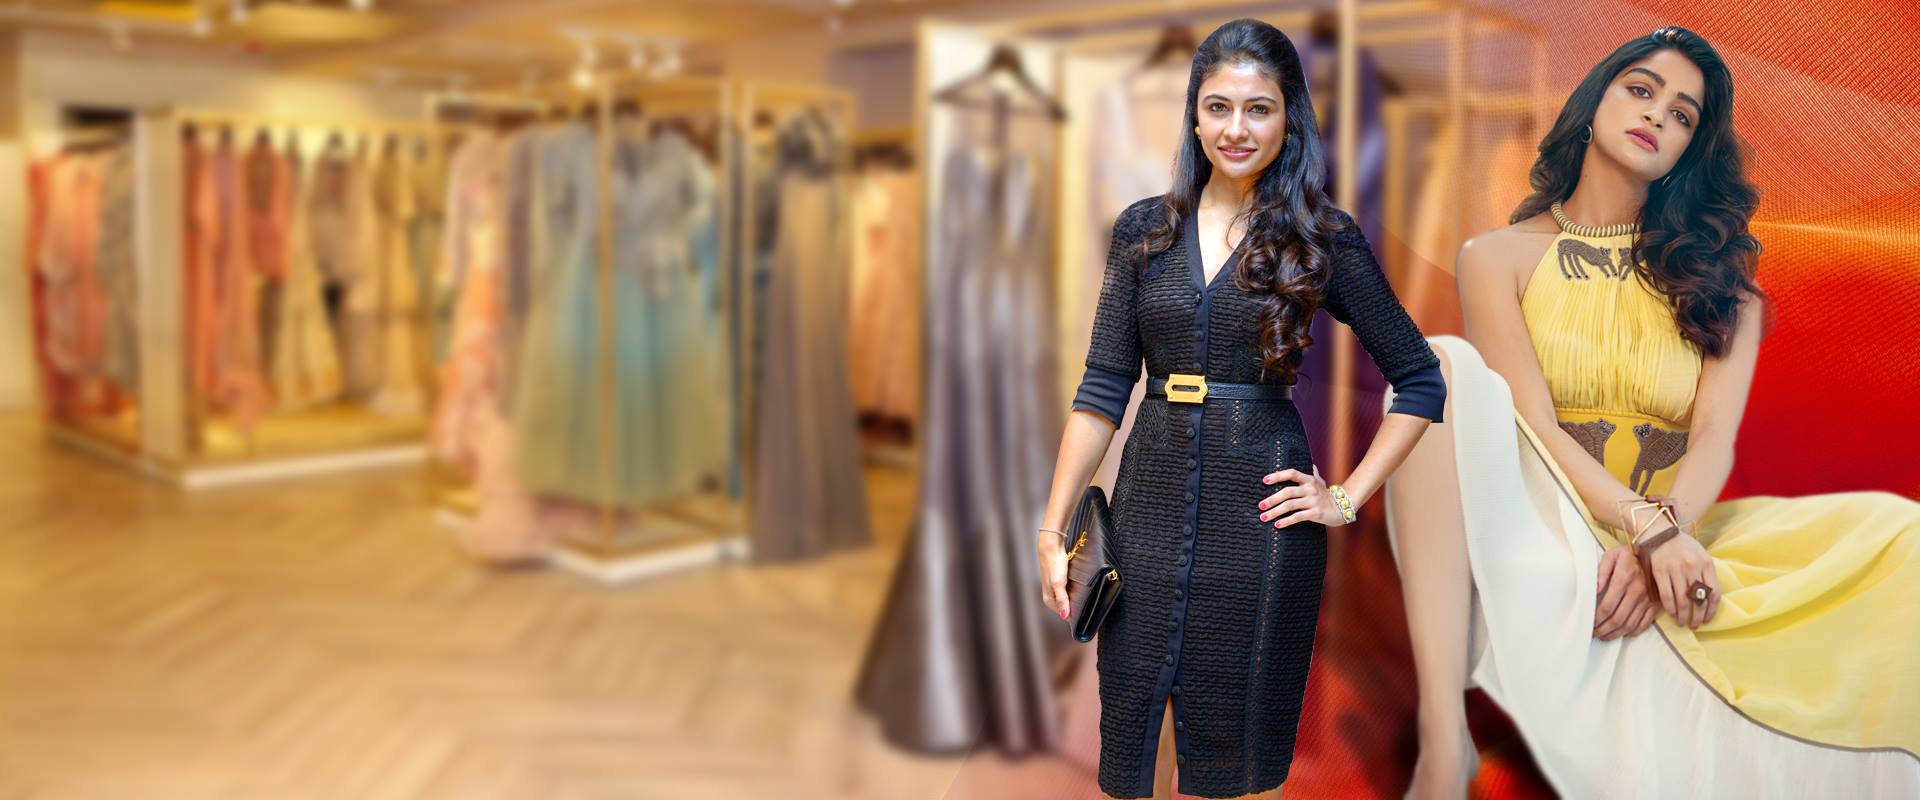 Aza Fashion Pvt Ltd in South Extension 1,Delhi - Best Saree Retailers in  Delhi - Justdial